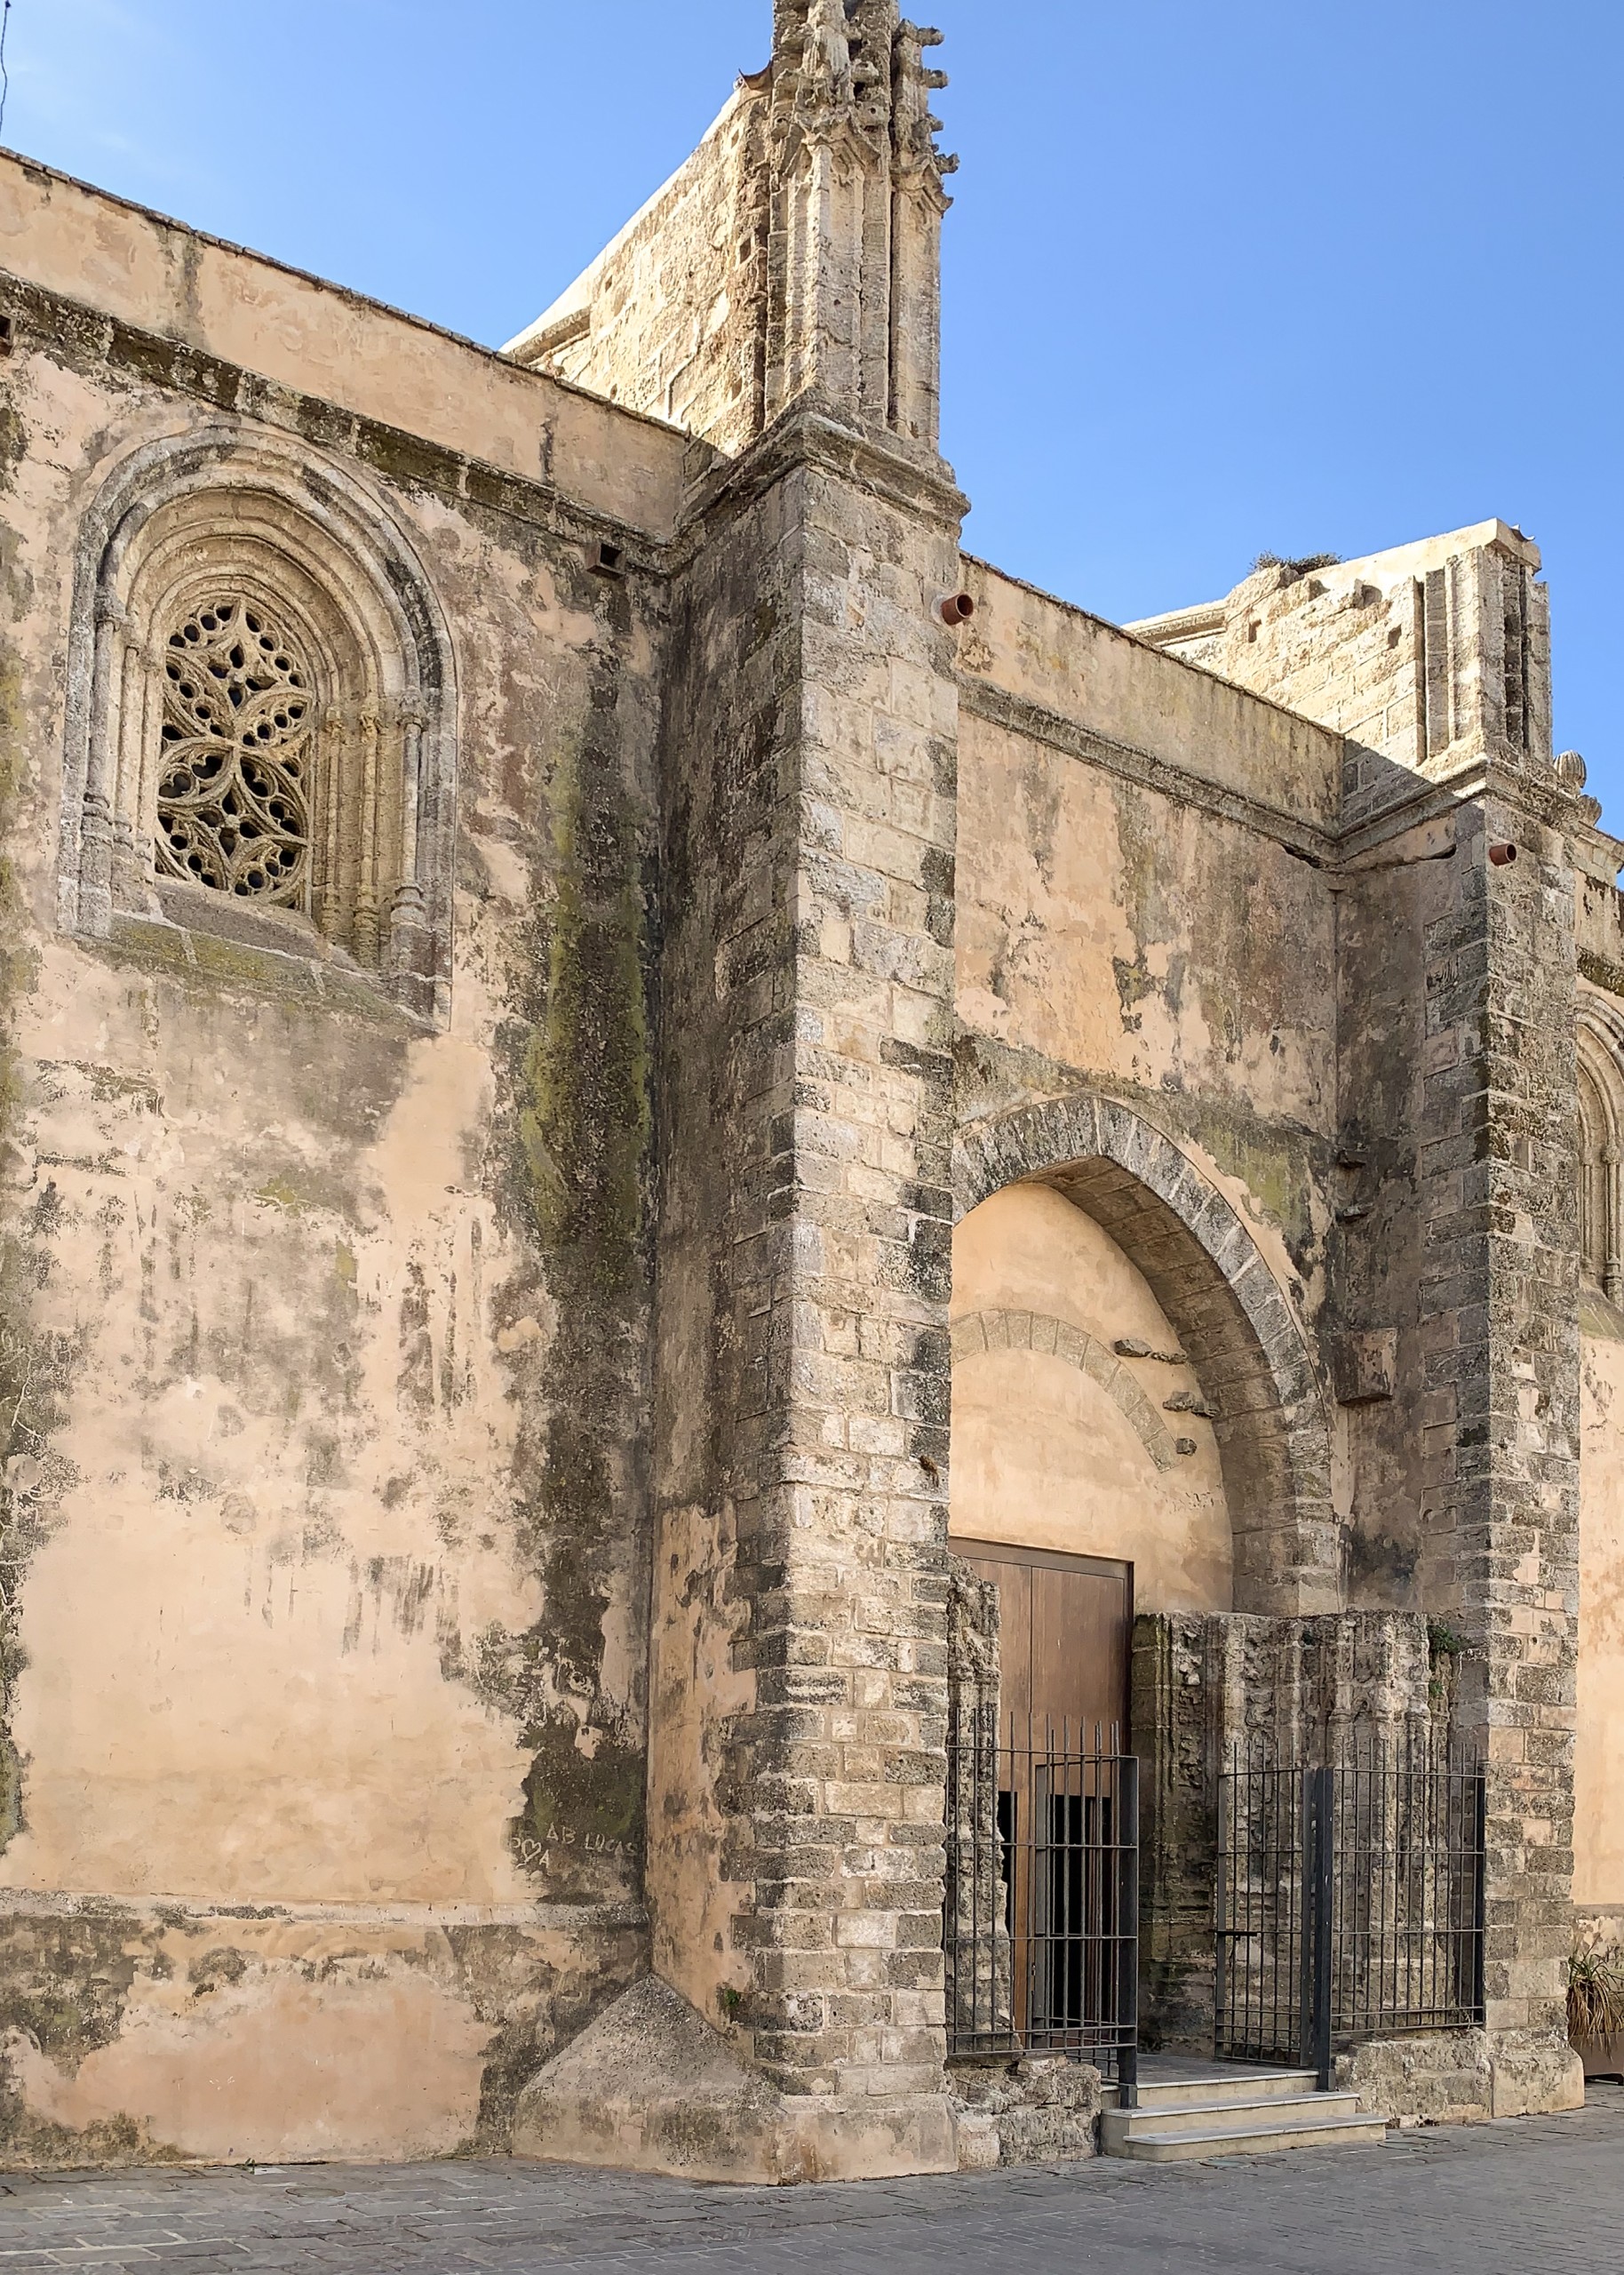 Ancient wall around Old Town Tarifa